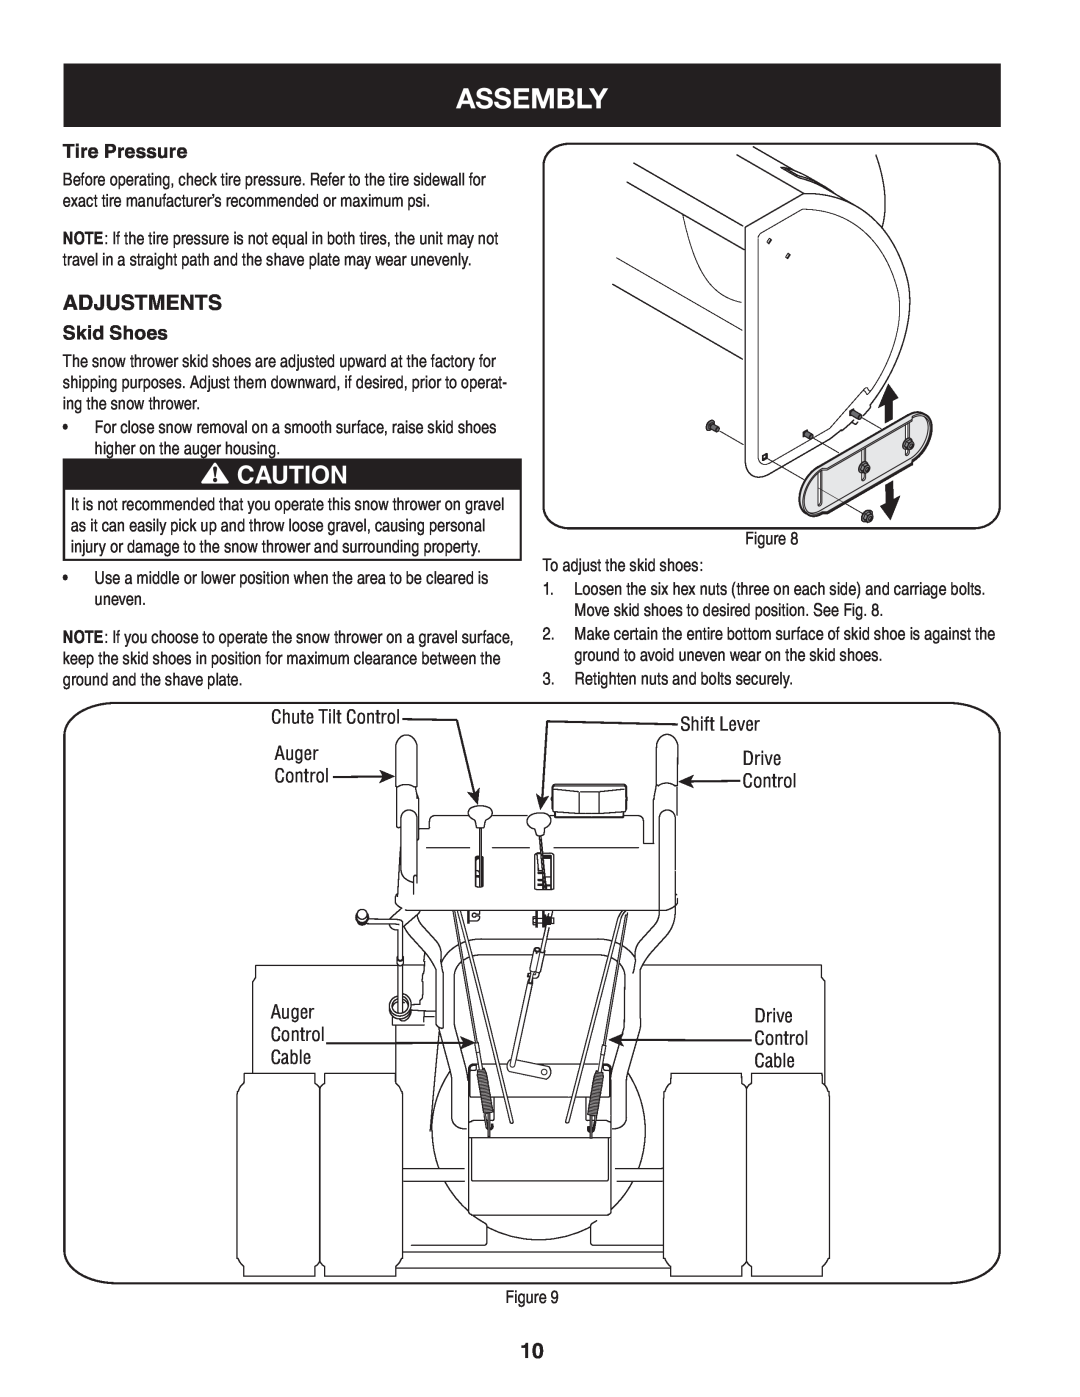 Craftsman 247.88845 manual Assembly, Adjustments, Tire Pressure, Skid Shoes 